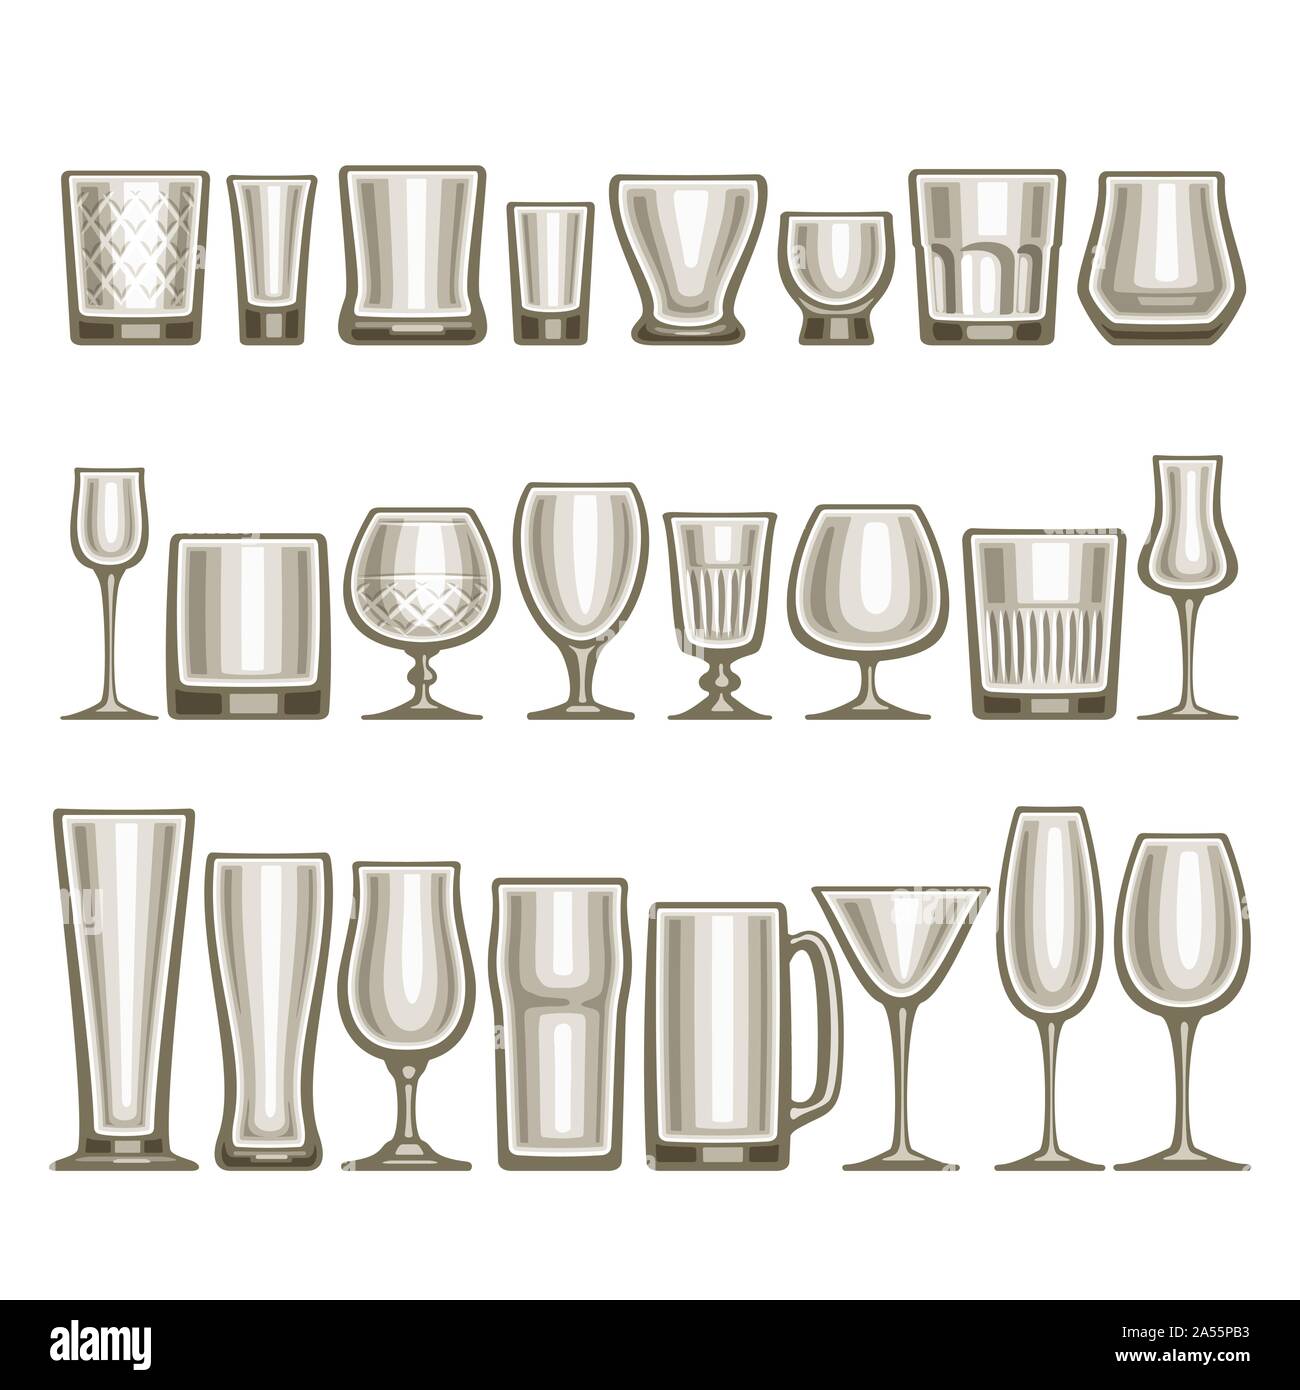 Types Of Bar Glasses Set Of Alcohol Glassware Stock Illustration